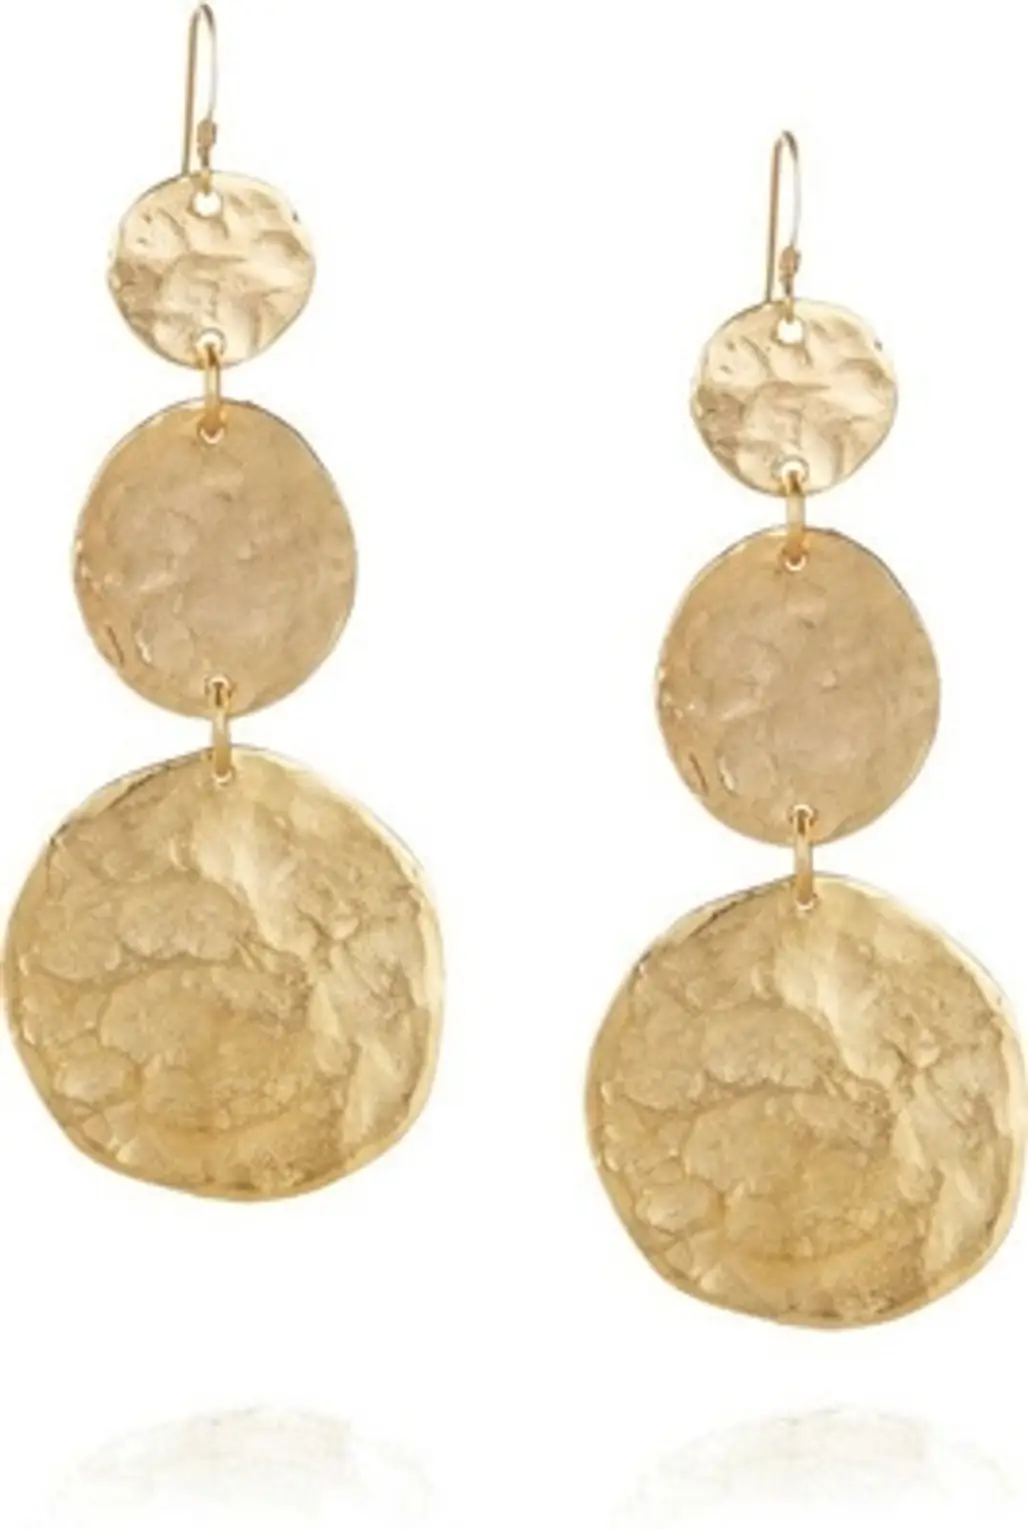 Kenneth Jay Lane 22-Karat Gold-Plated Coin Earrings